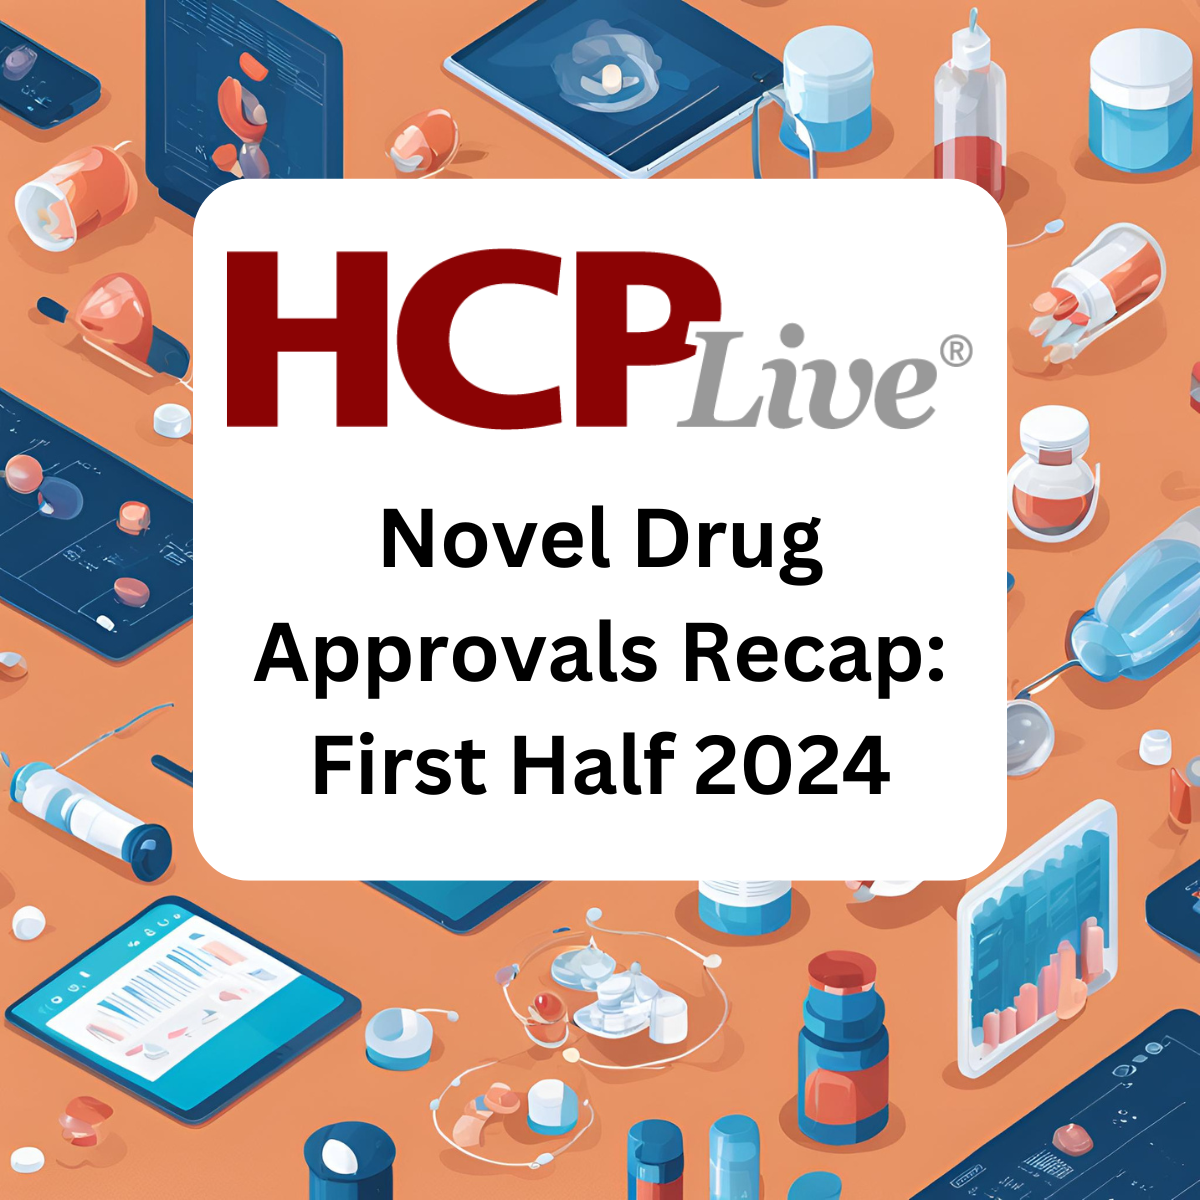 HCPLive FDA Novel Drug Approvals Recap First Half 2024 thumbnail.